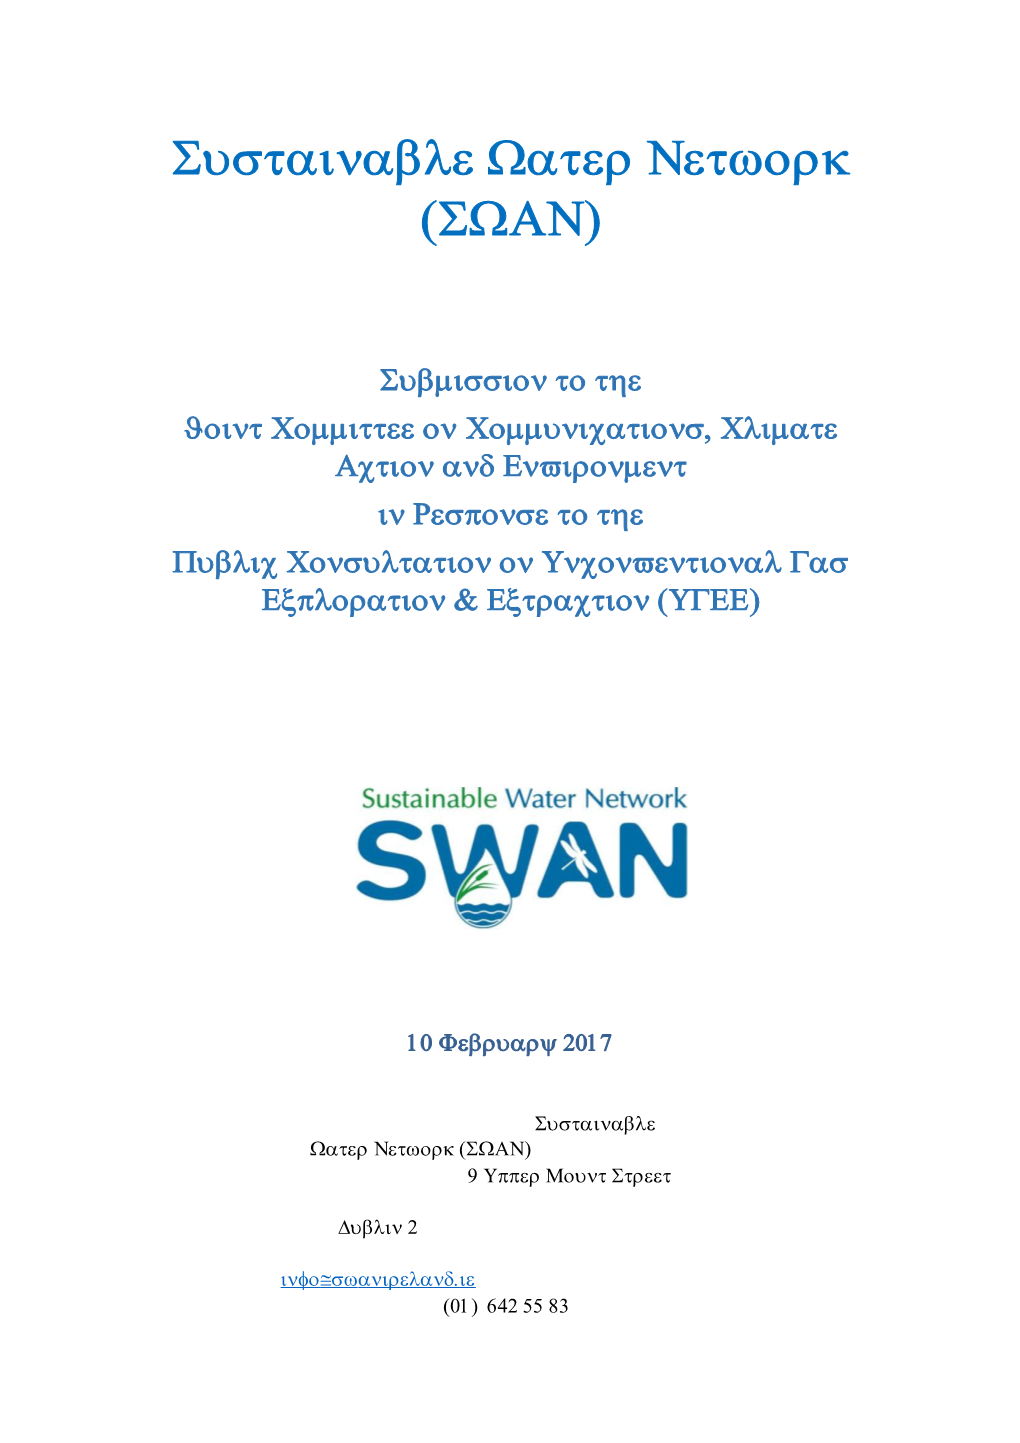 Sustainable Water Network (SWAN)